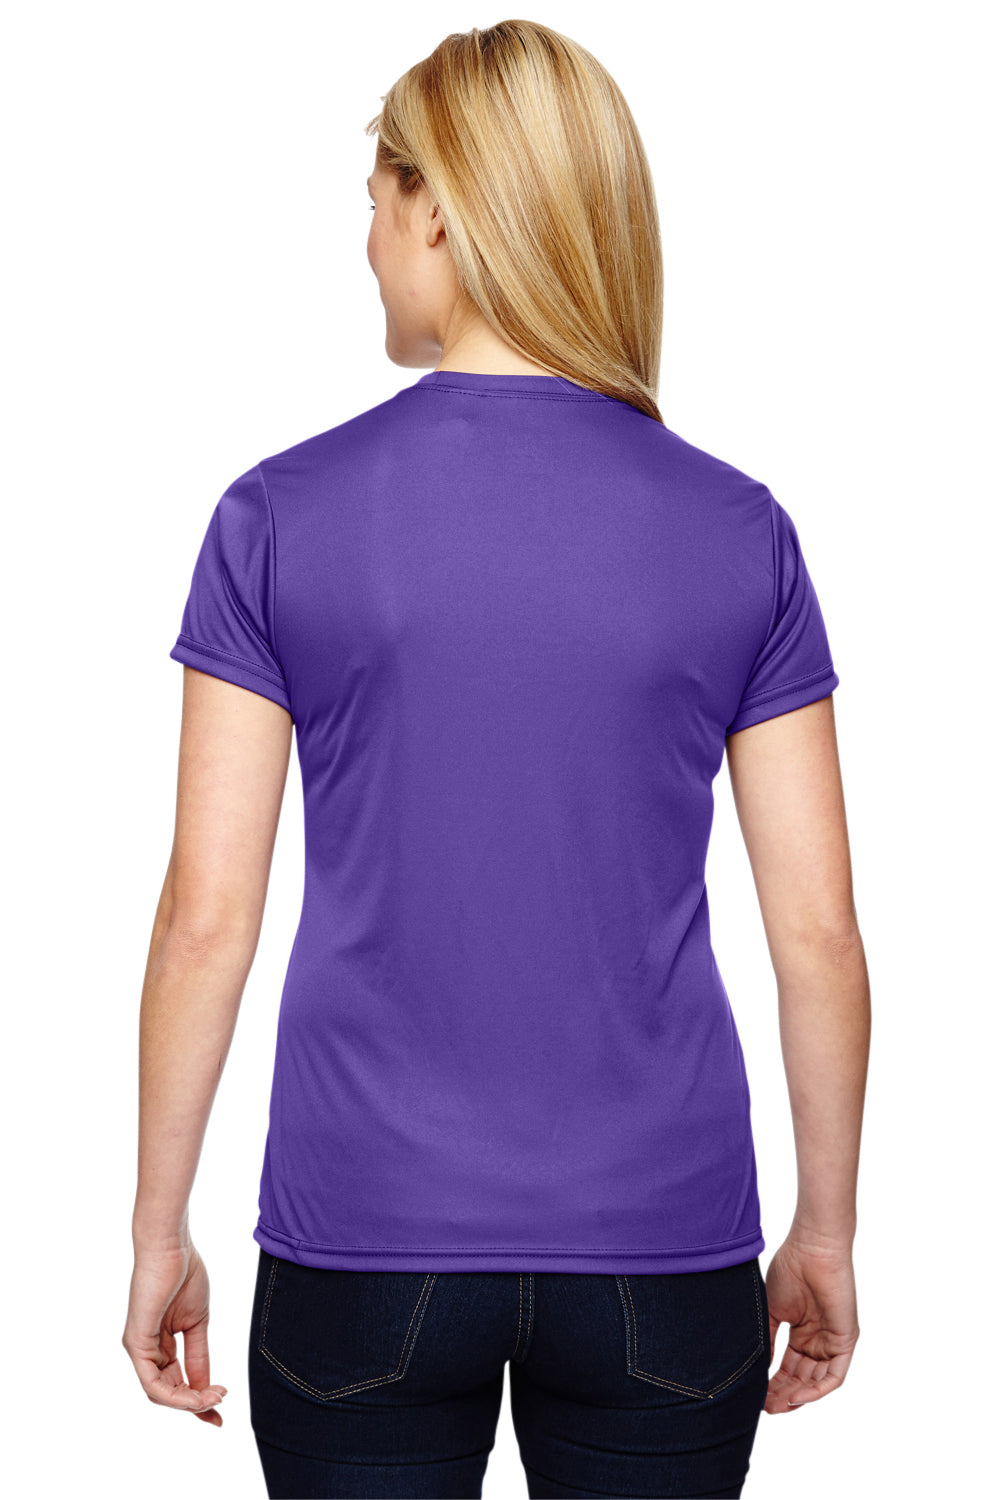 A4 NW3201 Womens Performance Moisture Wicking Short Sleeve Crewneck T-Shirt Purple Model Back